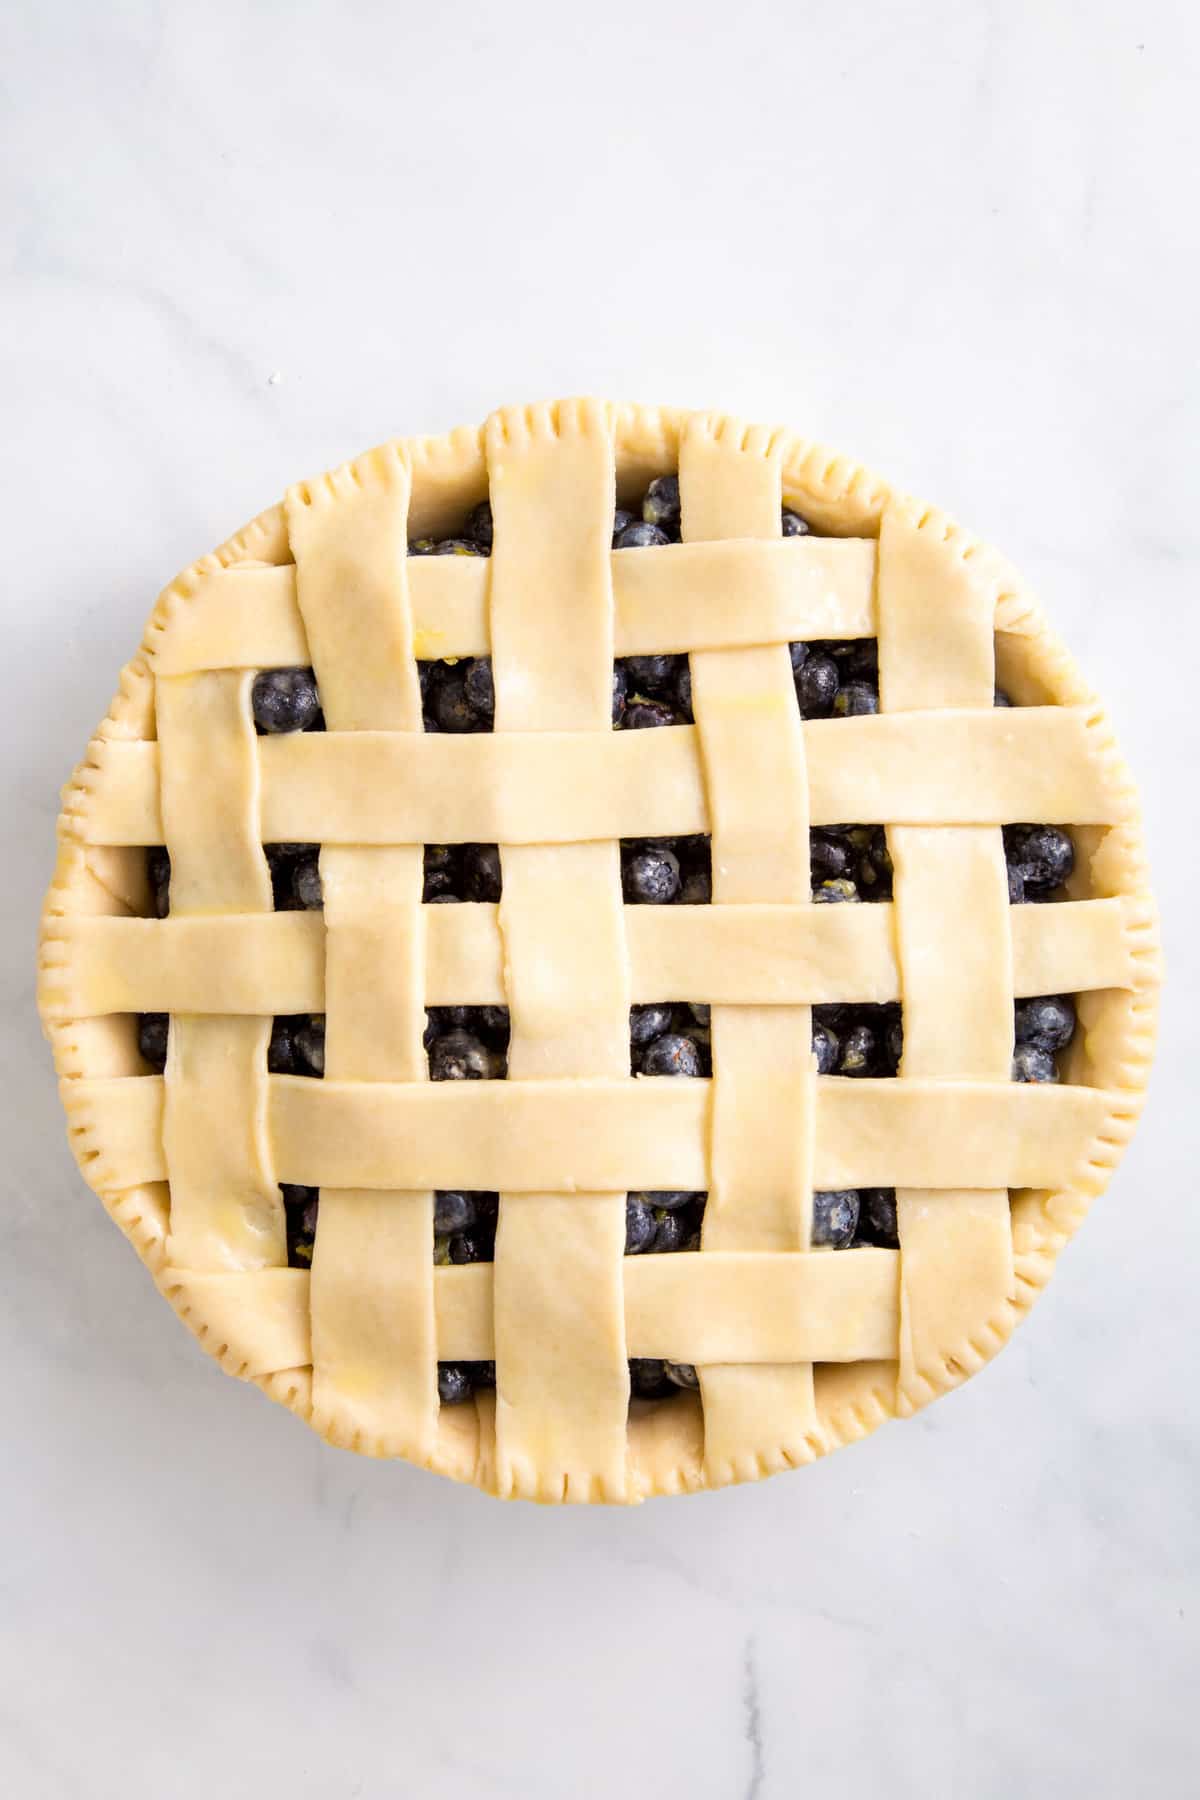 lattice design on a blueberry pie